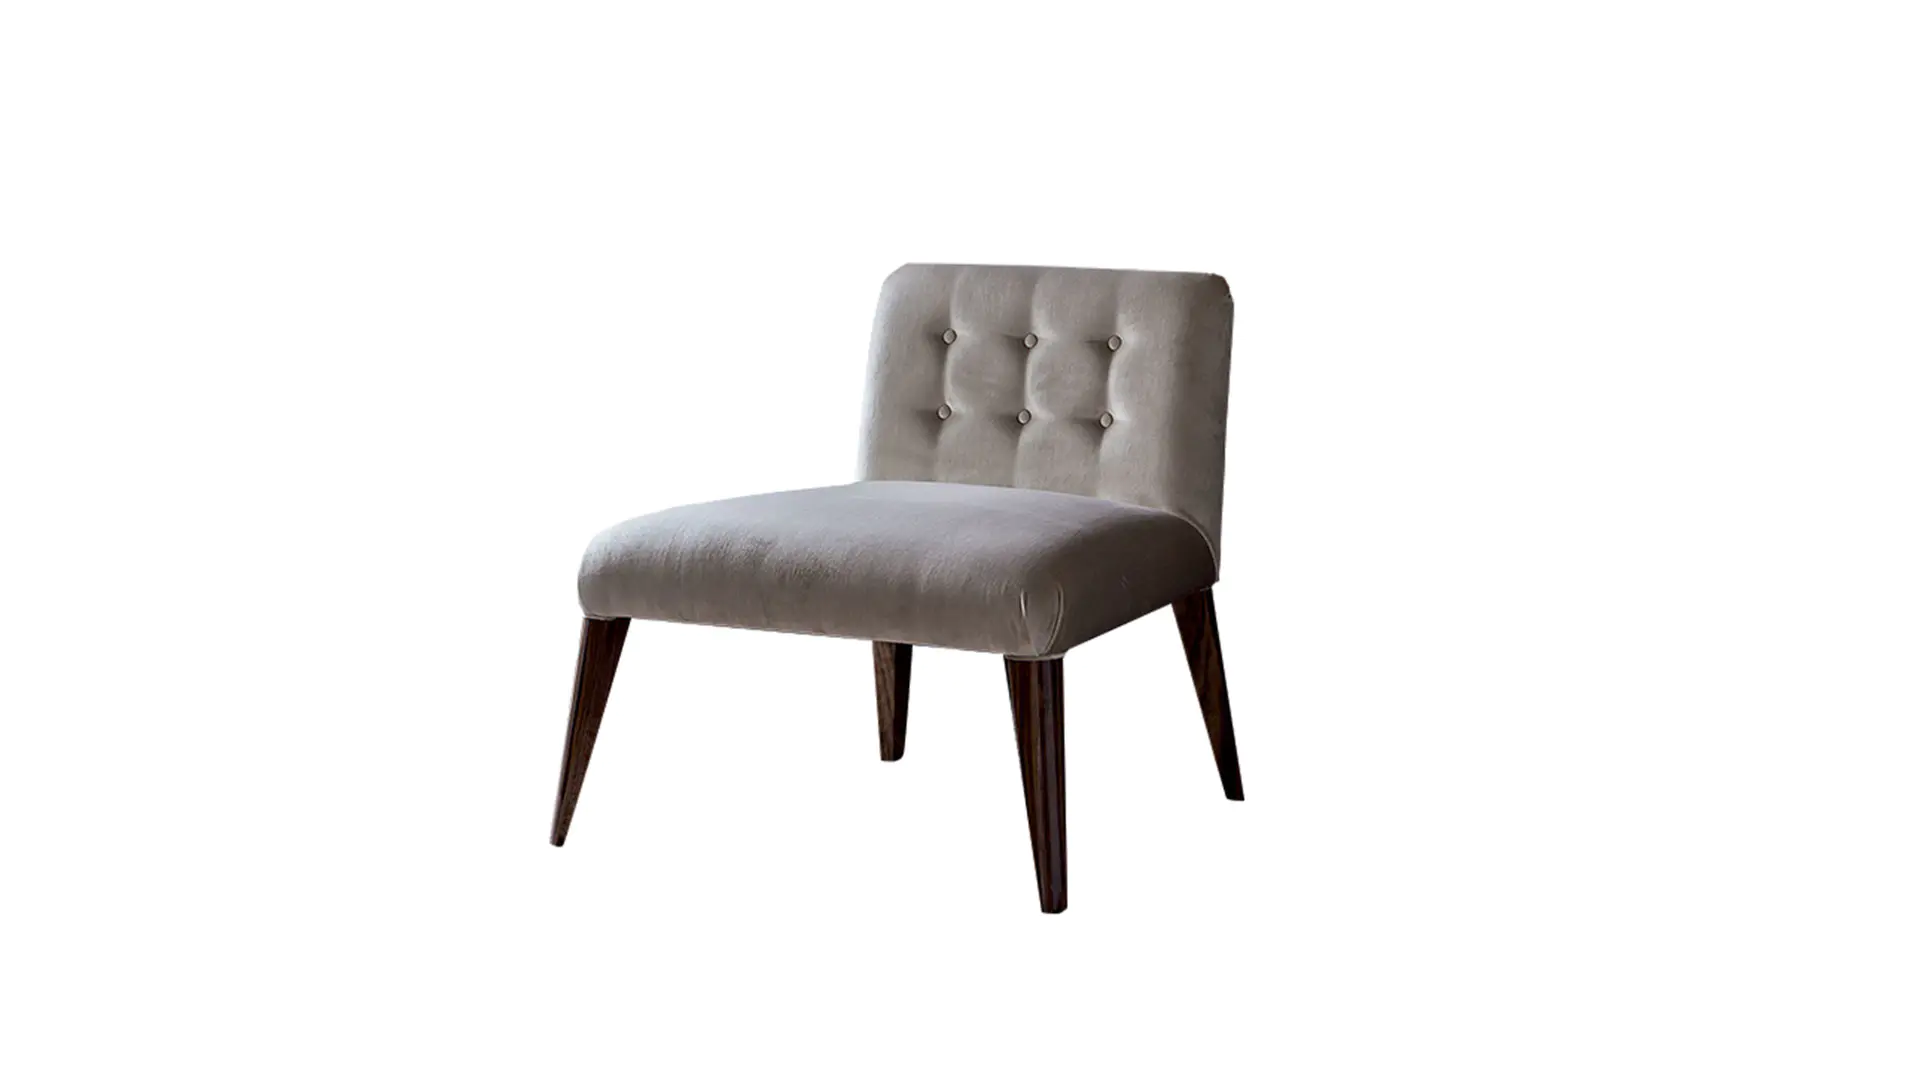 Italian Design Hotel Living Room Single Sofa Armchair Furniture